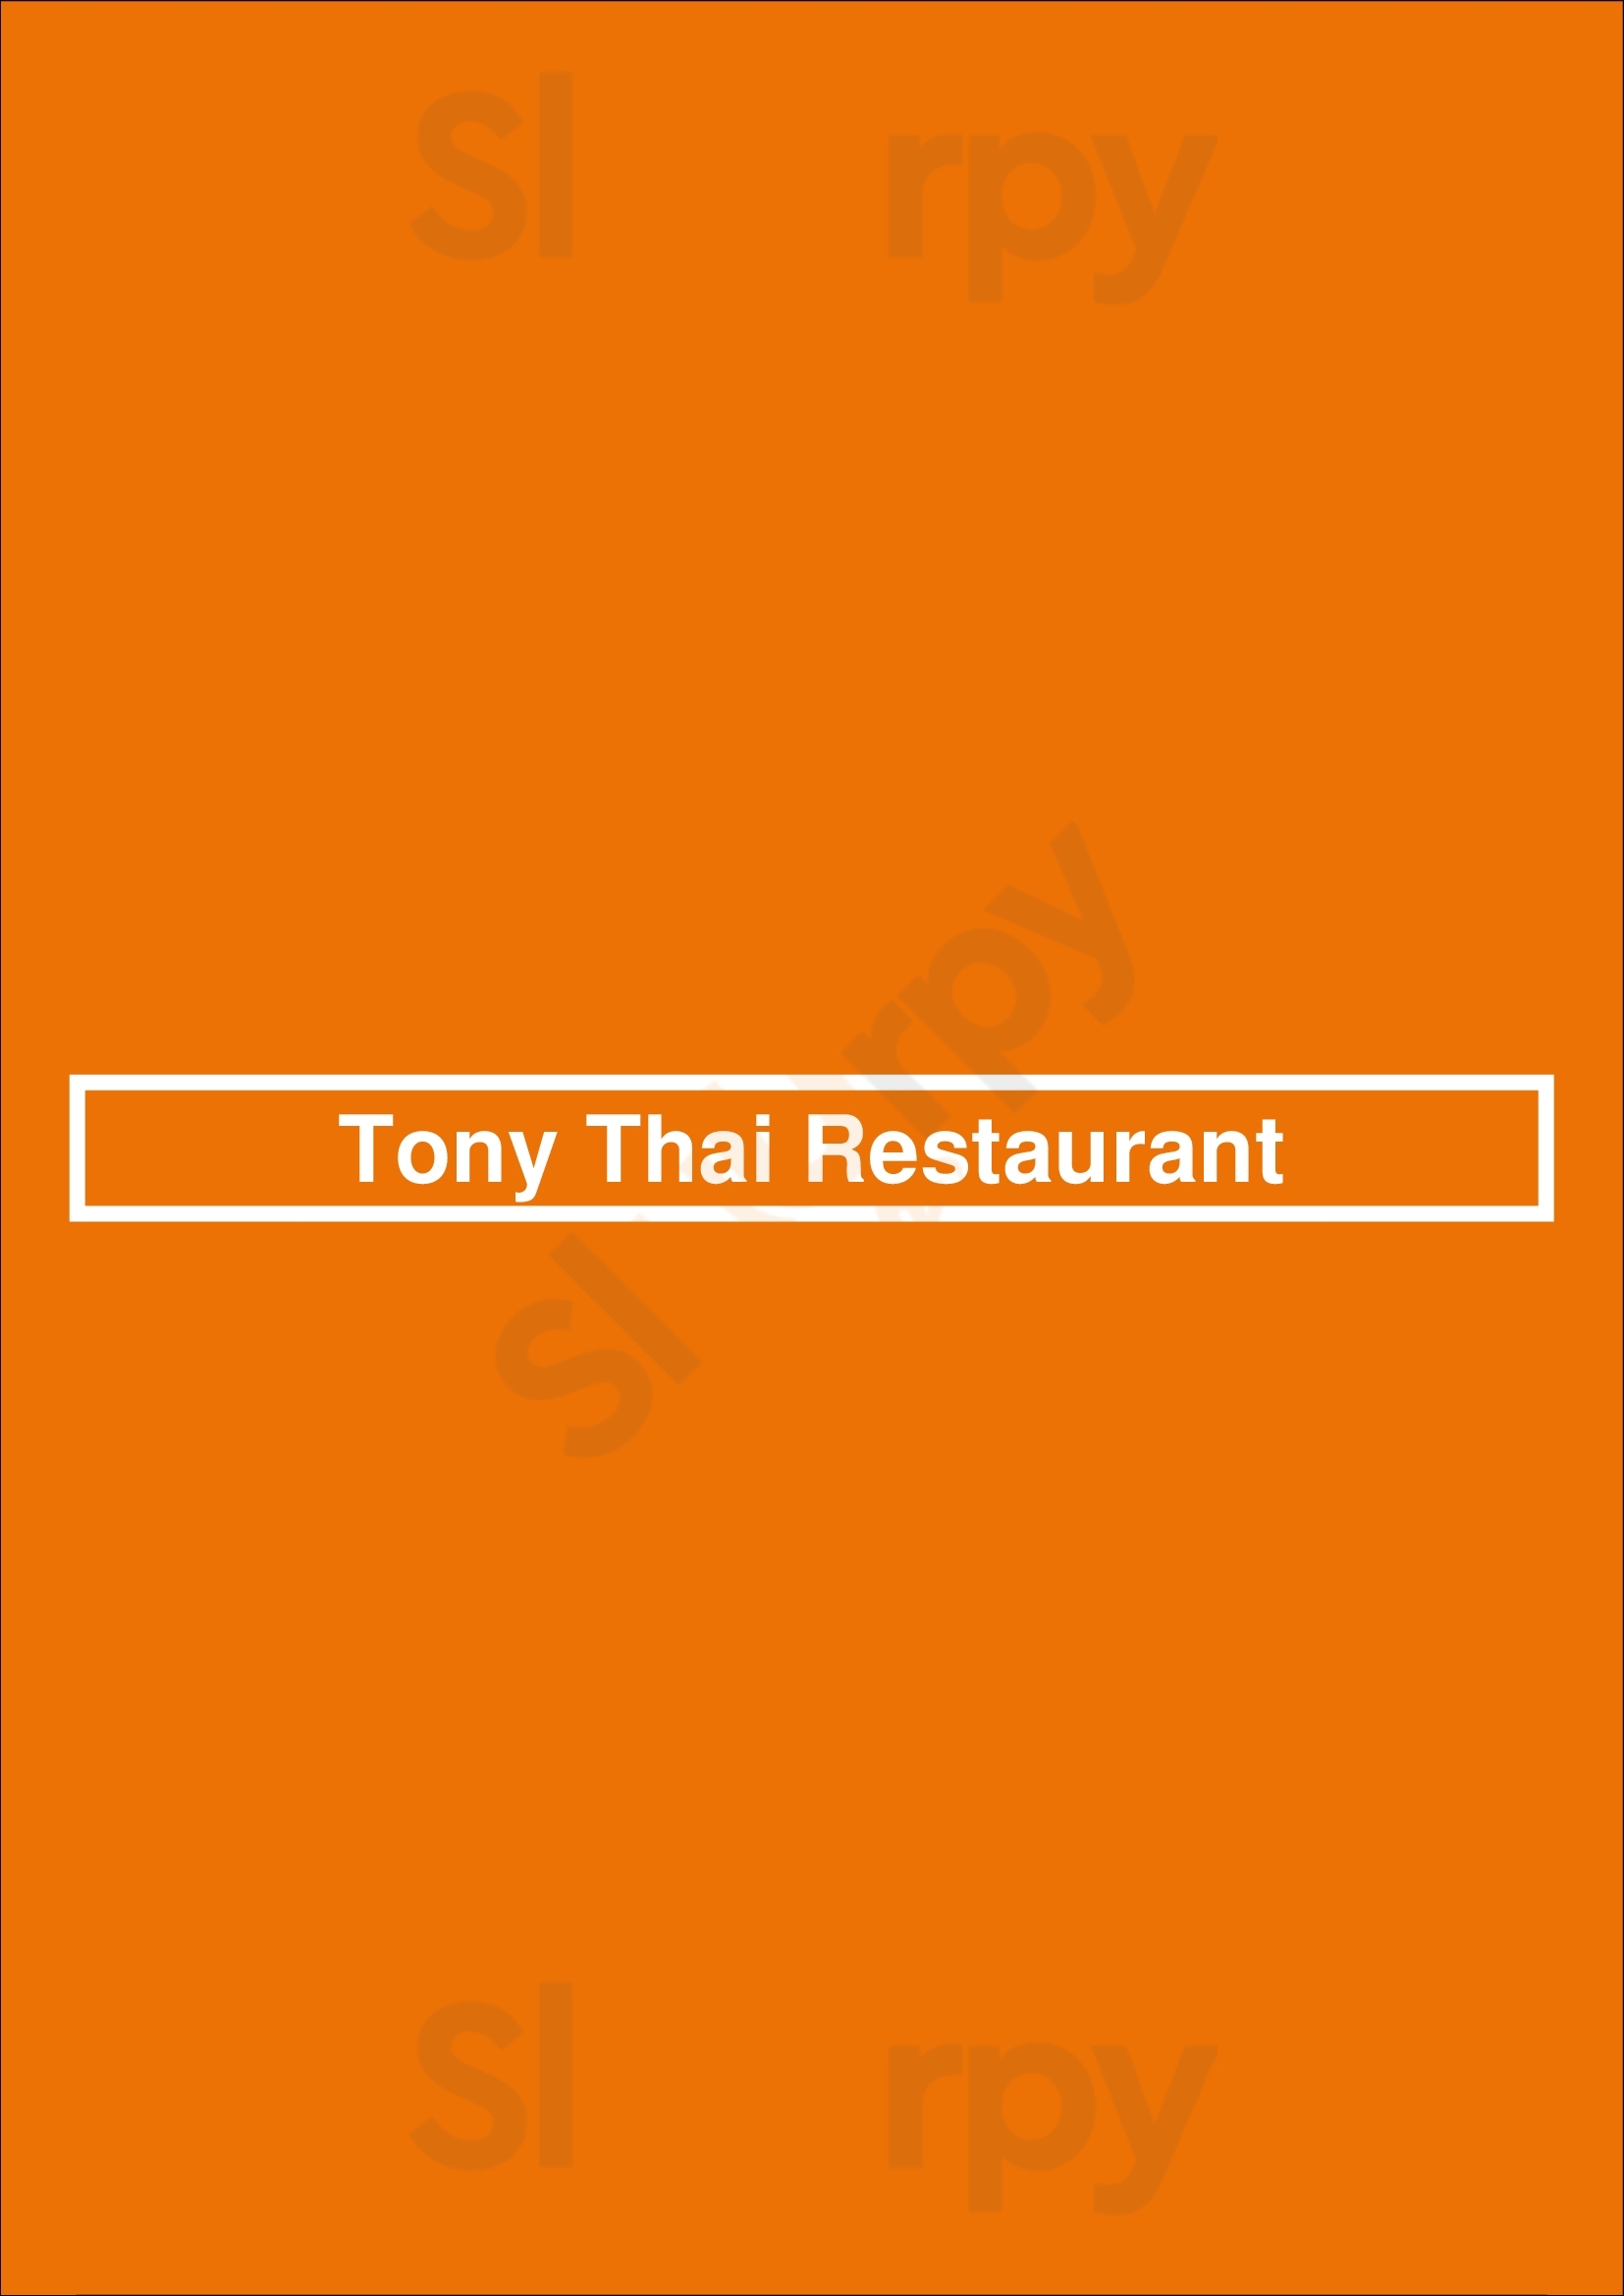 Tony Thai Restaurant Houston Menu - 1